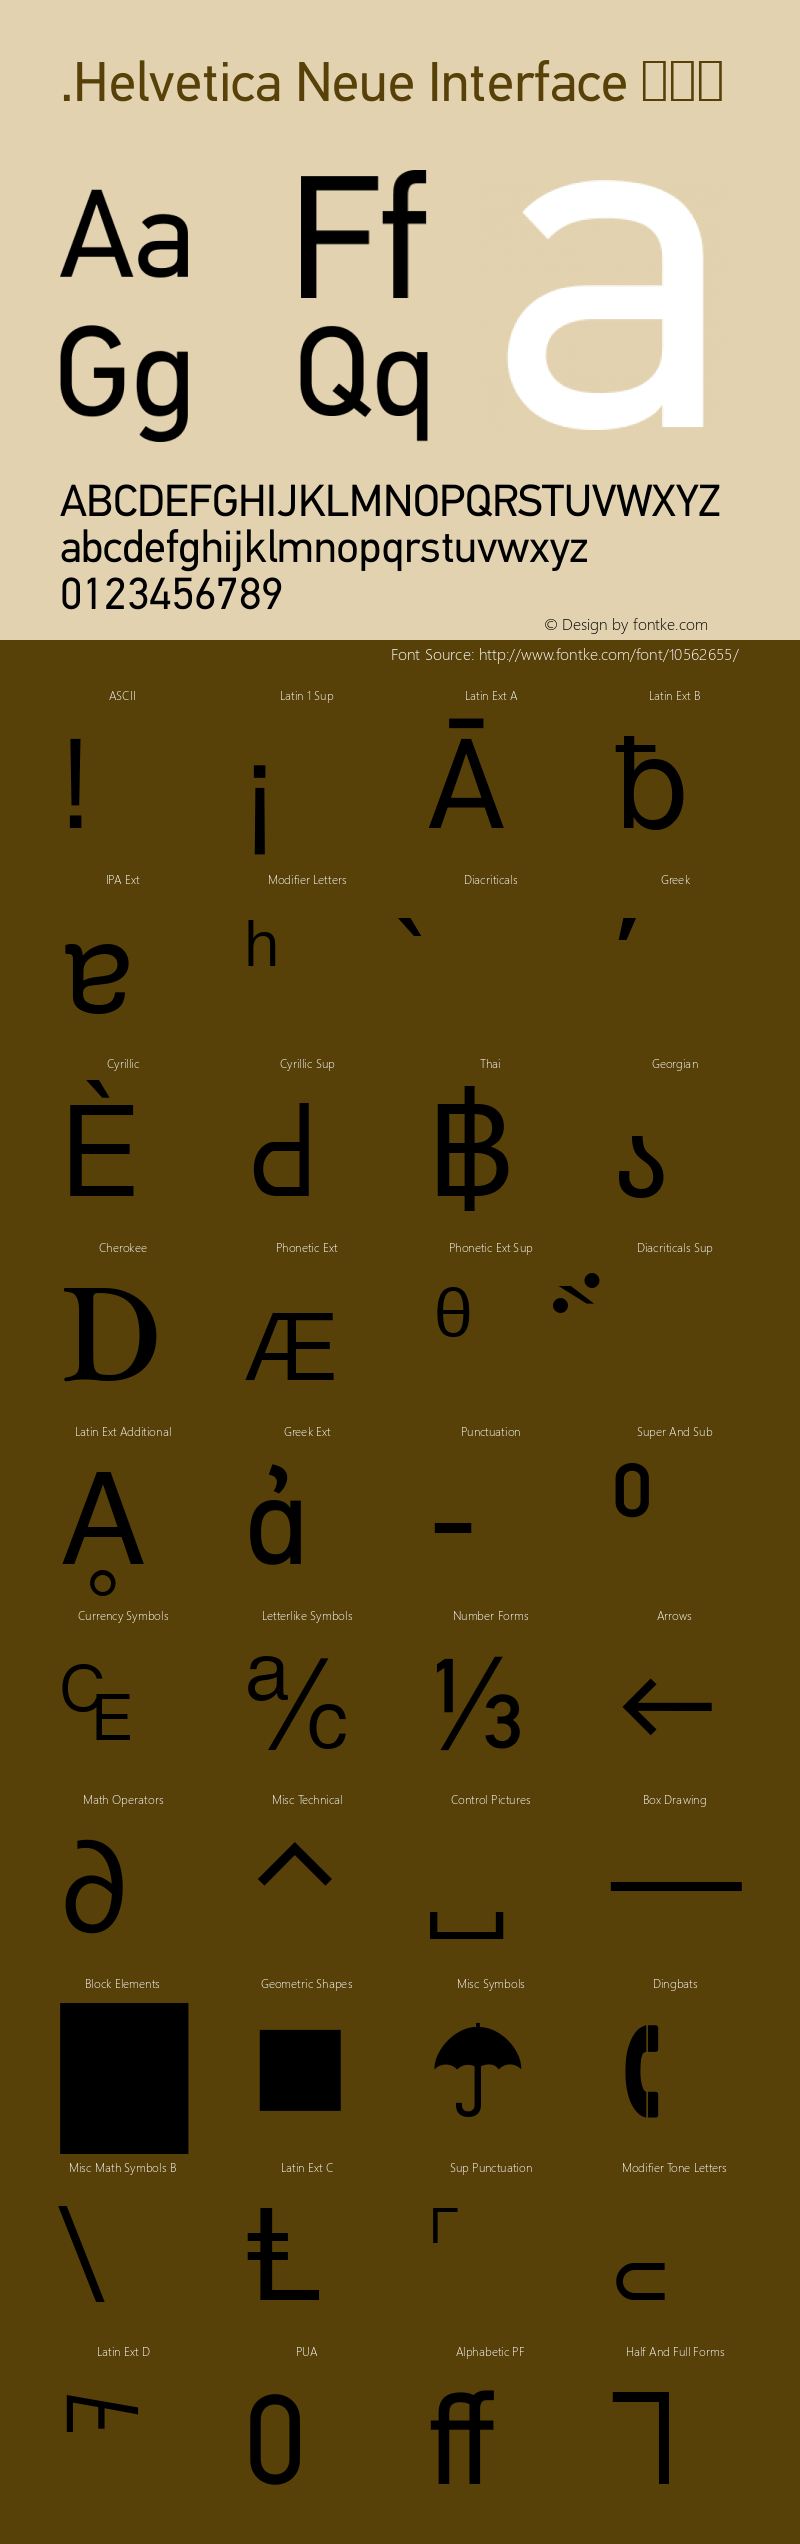 .Helvetica Neue Interface 超细体 9.0d61e1图片样张